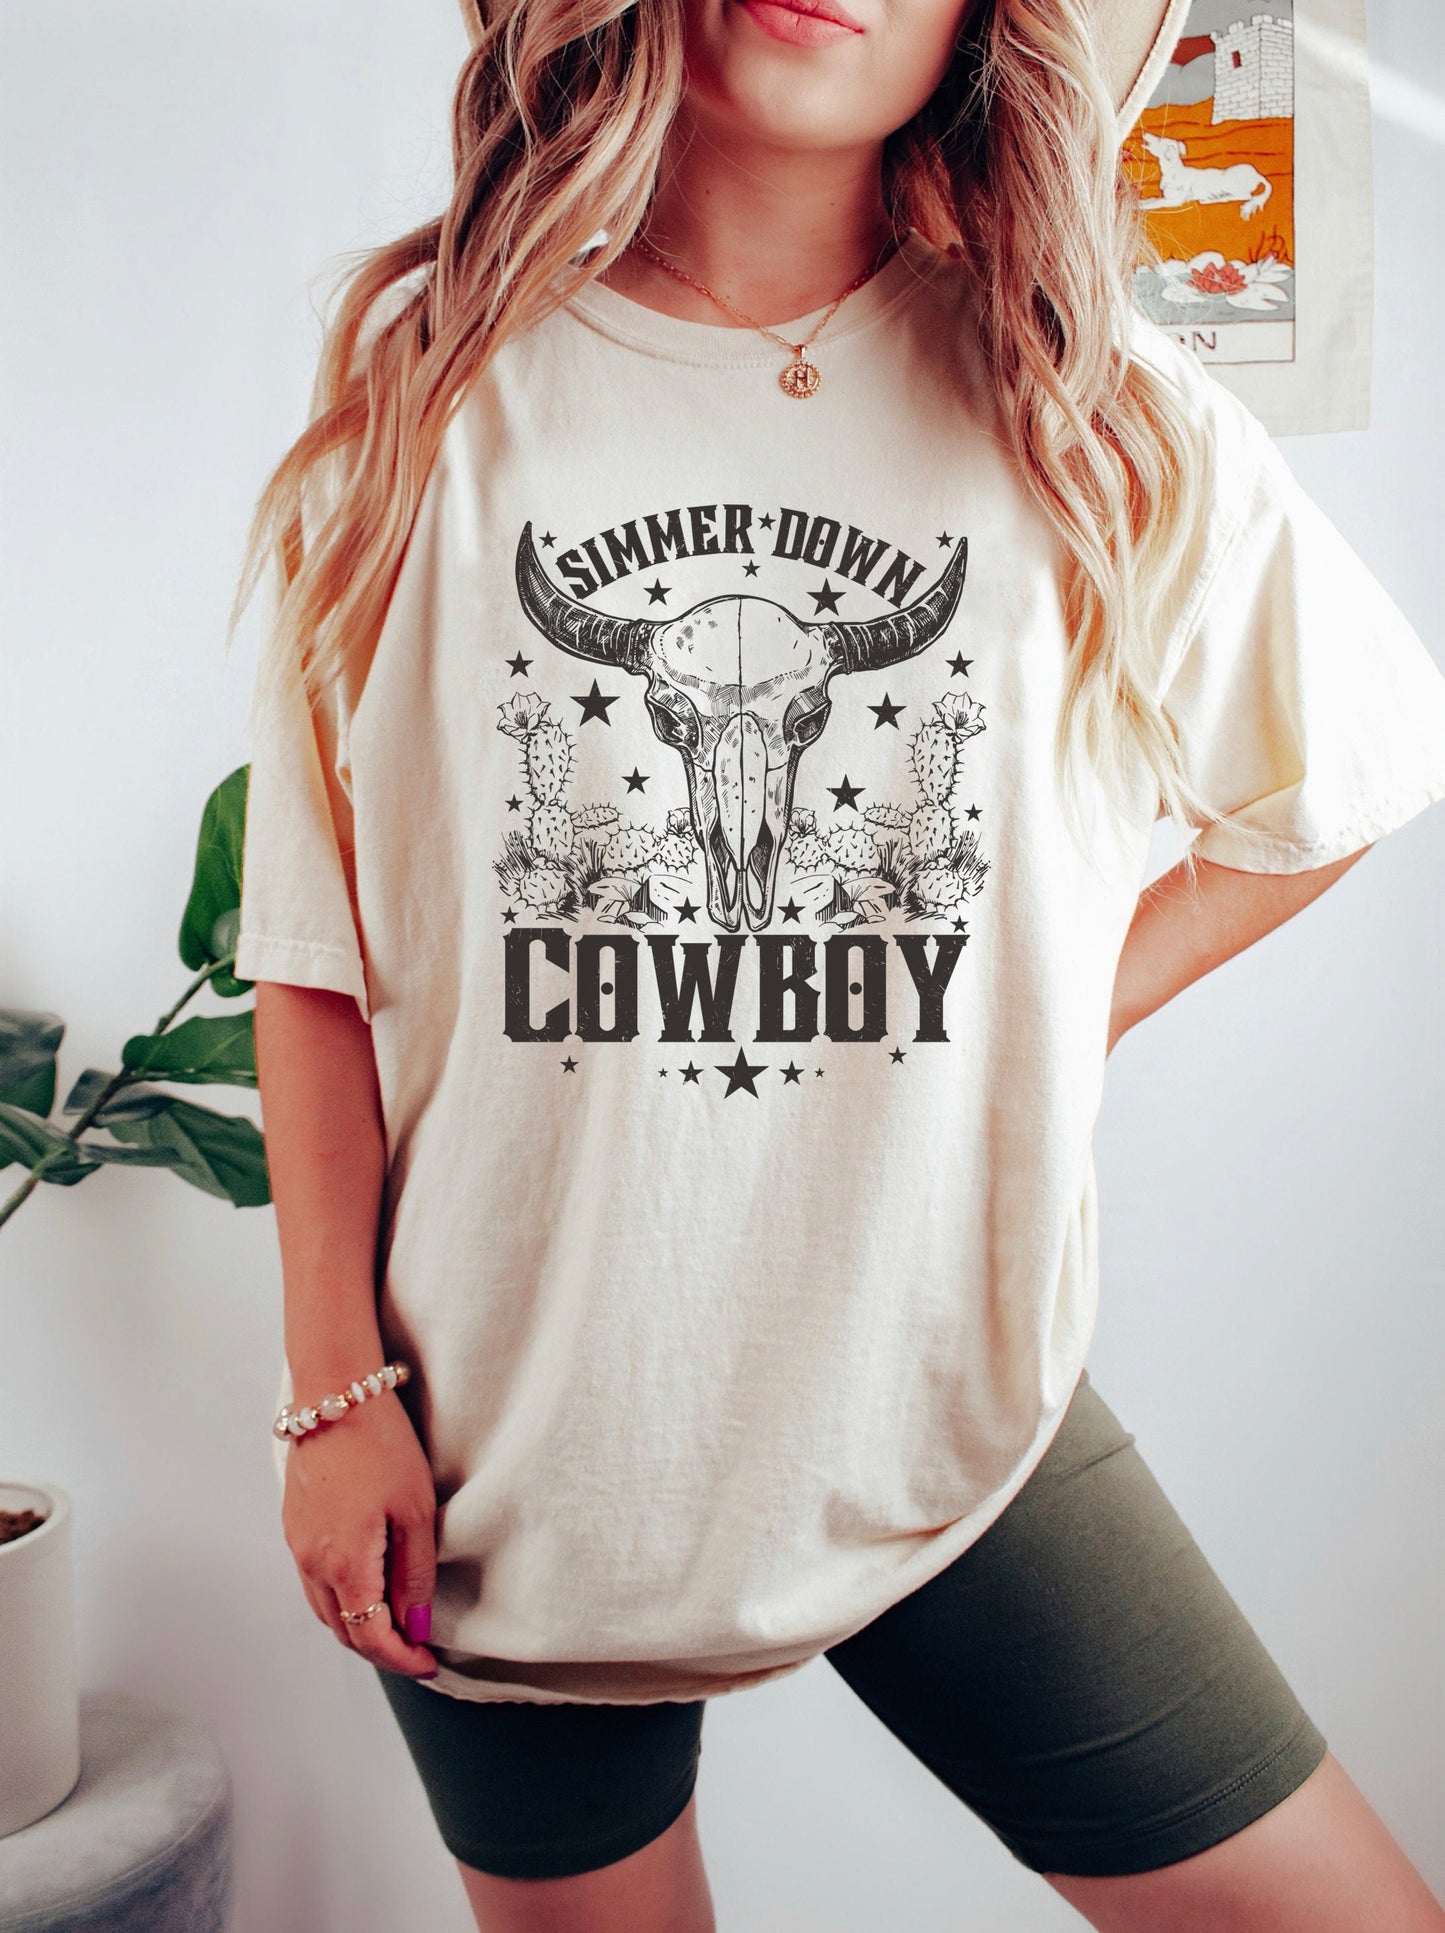 Simmer Down Cowboy Shirt